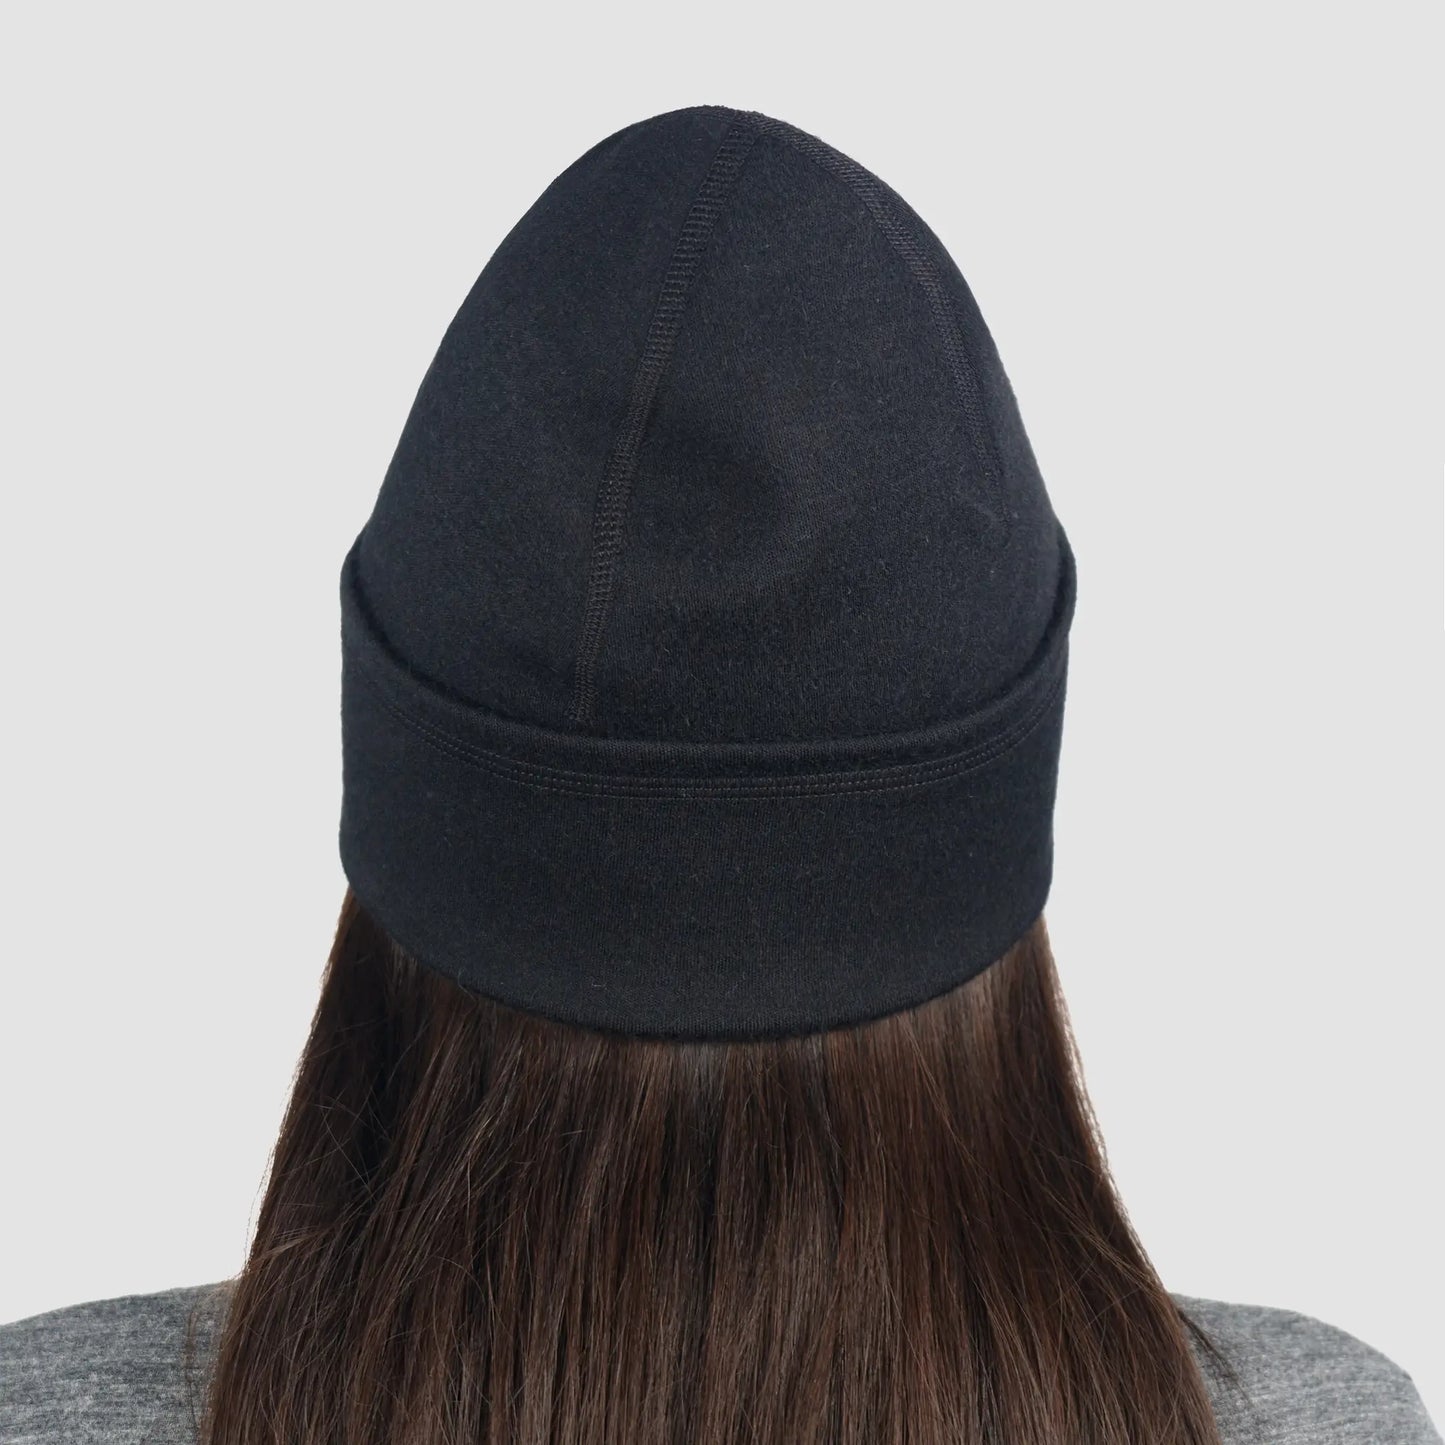 unisex sustainable folded beanie hat lightweight color black